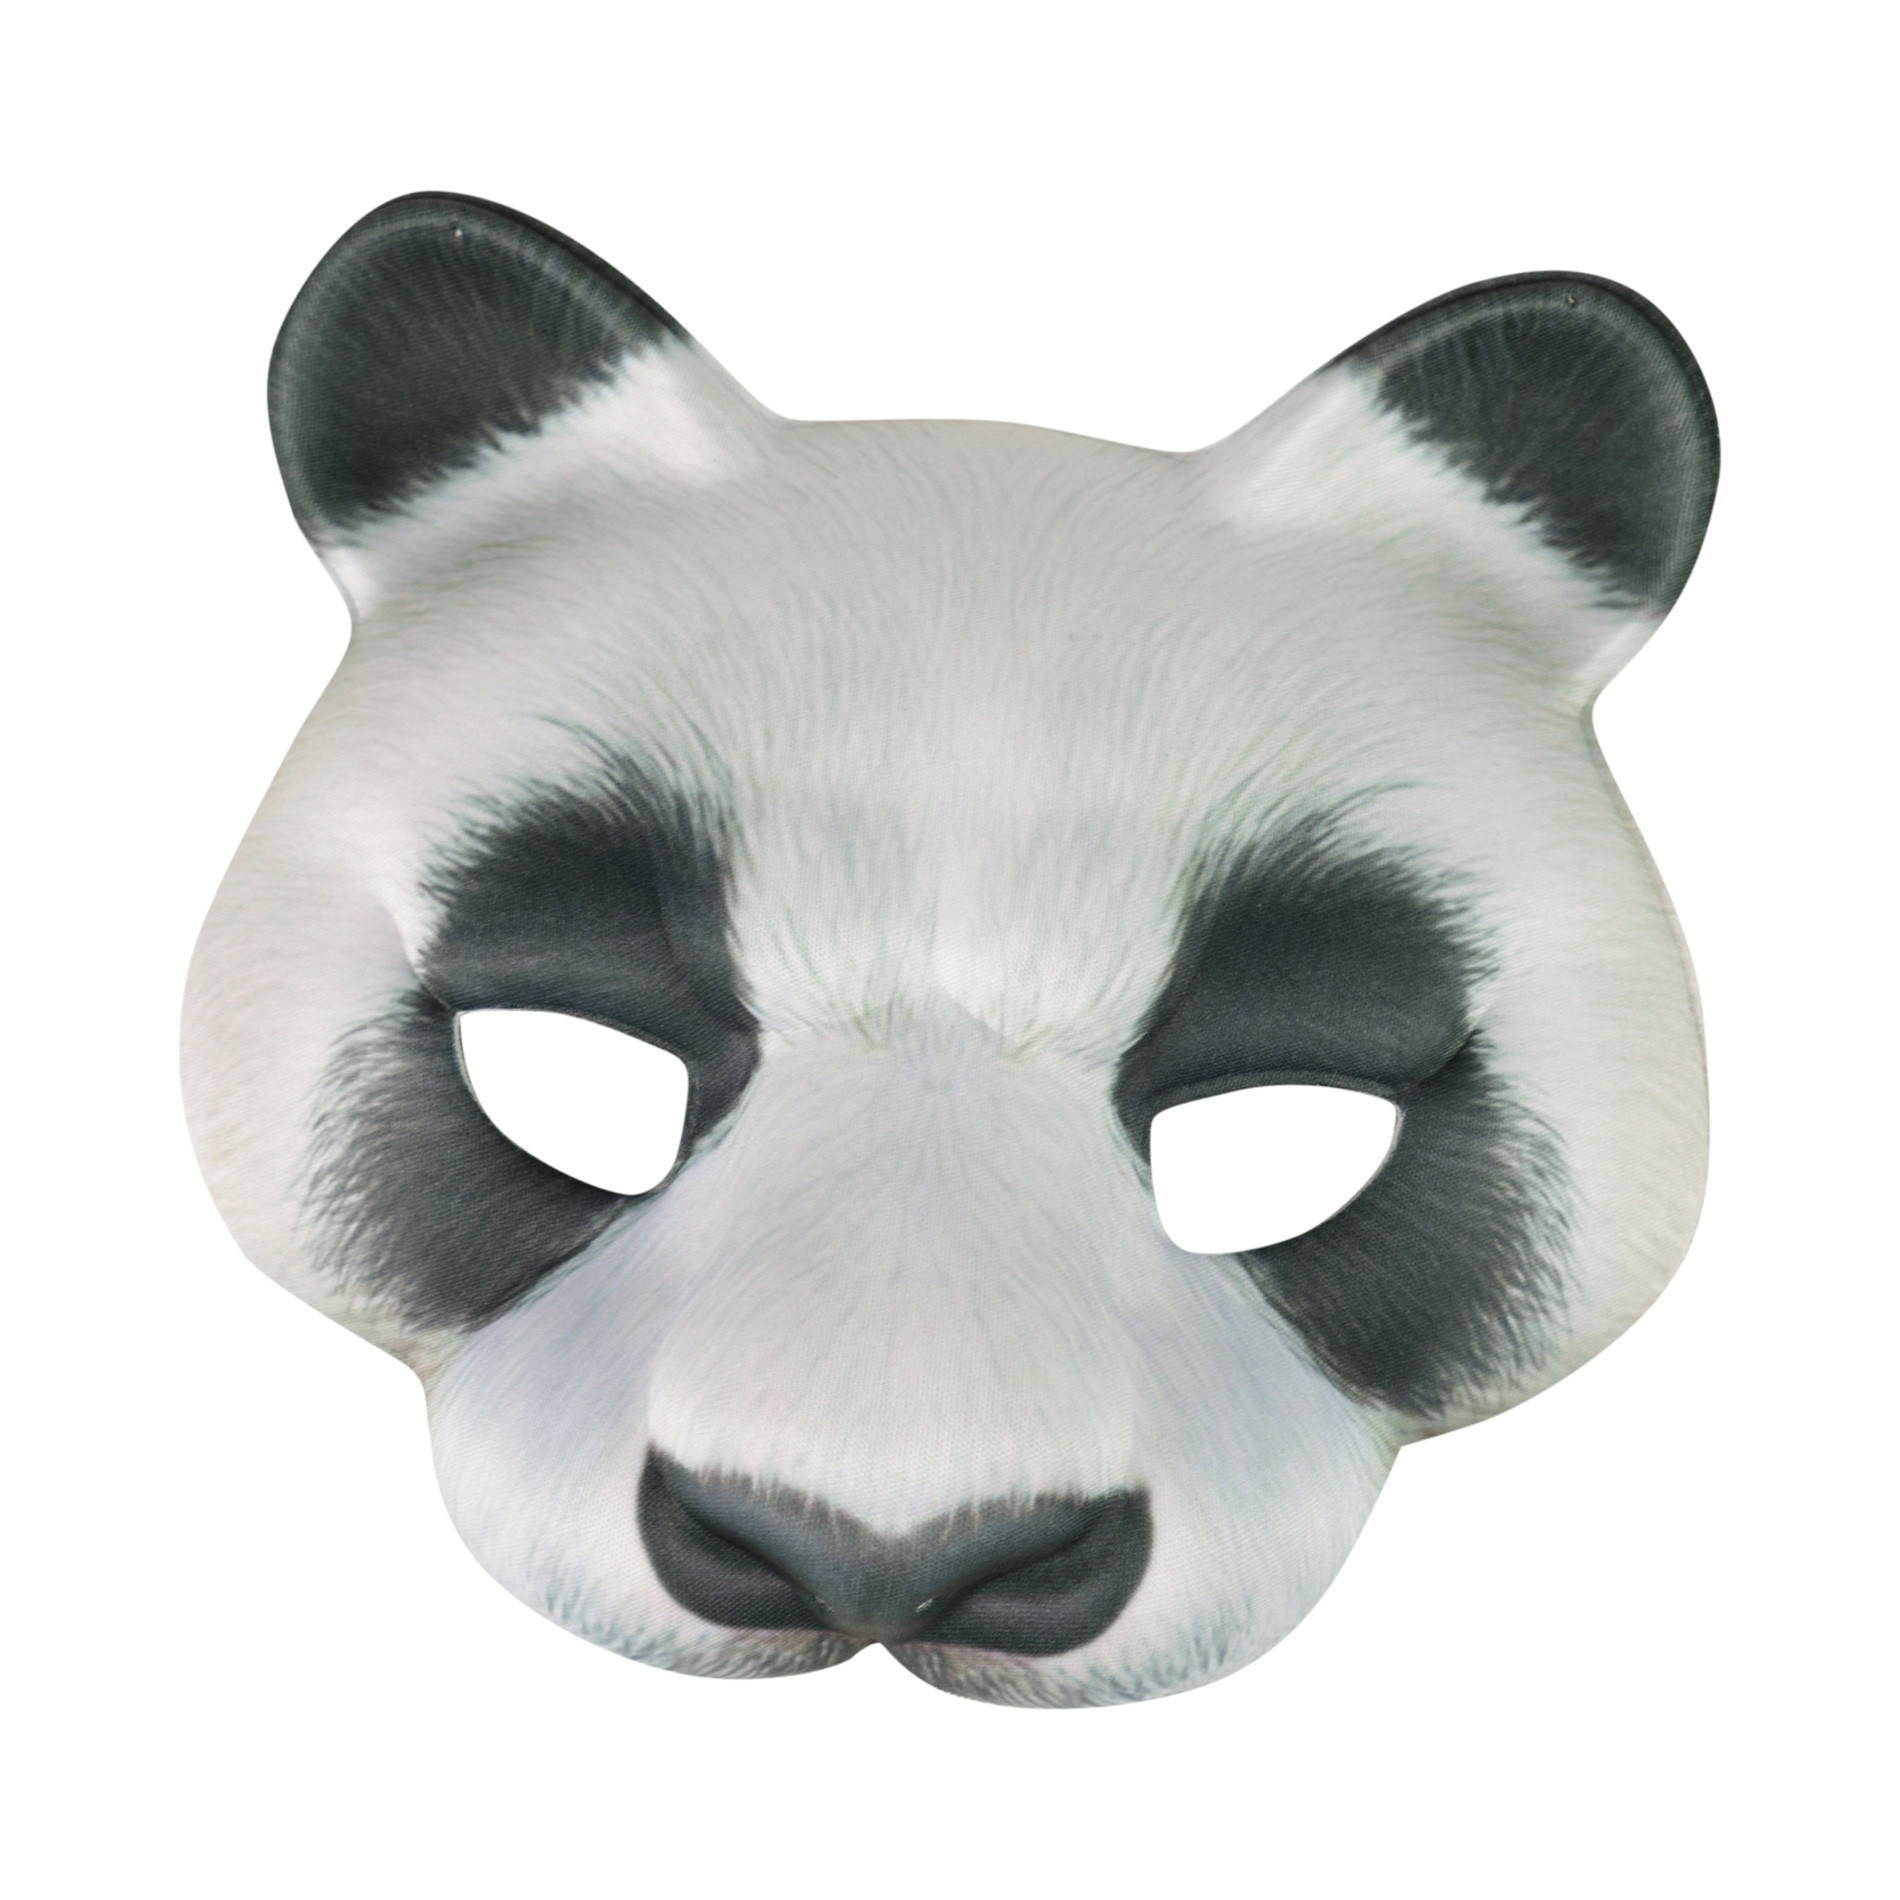 the panda mask for kids